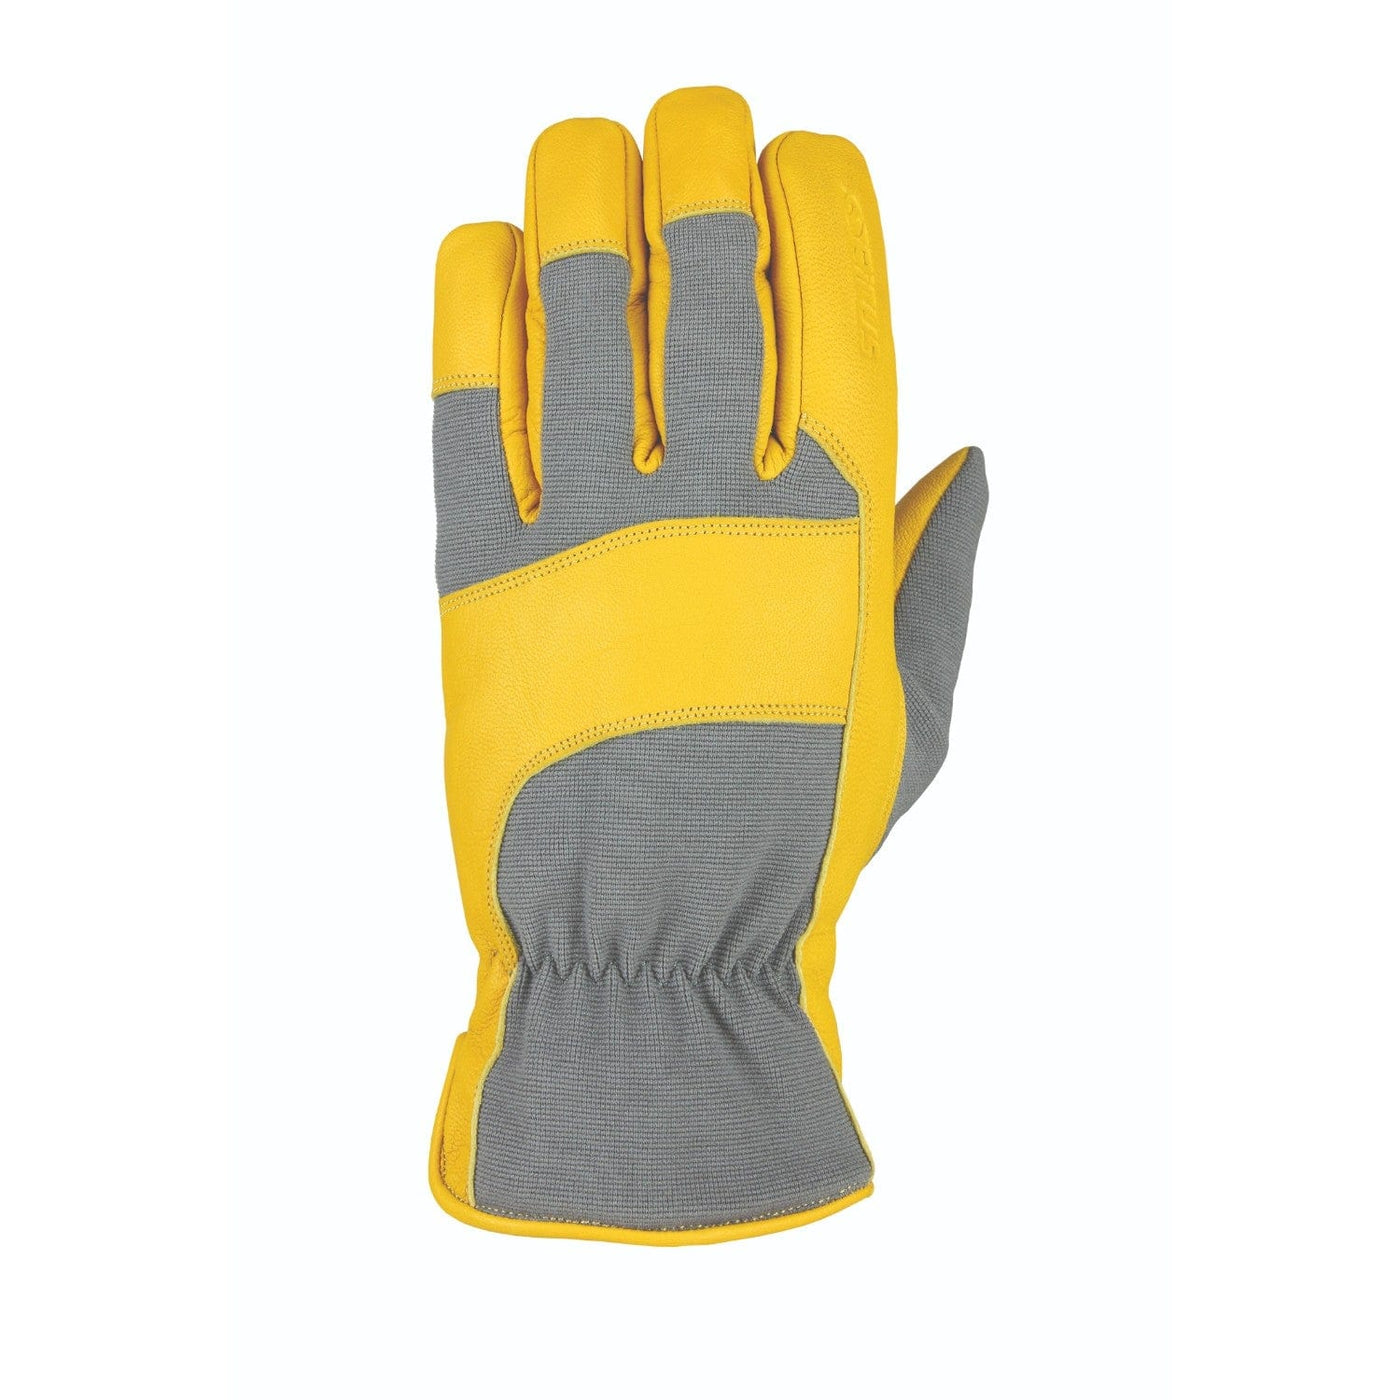 Seirus Heatwave Leather Glove Gray Tan Goatskin M Small Apparel